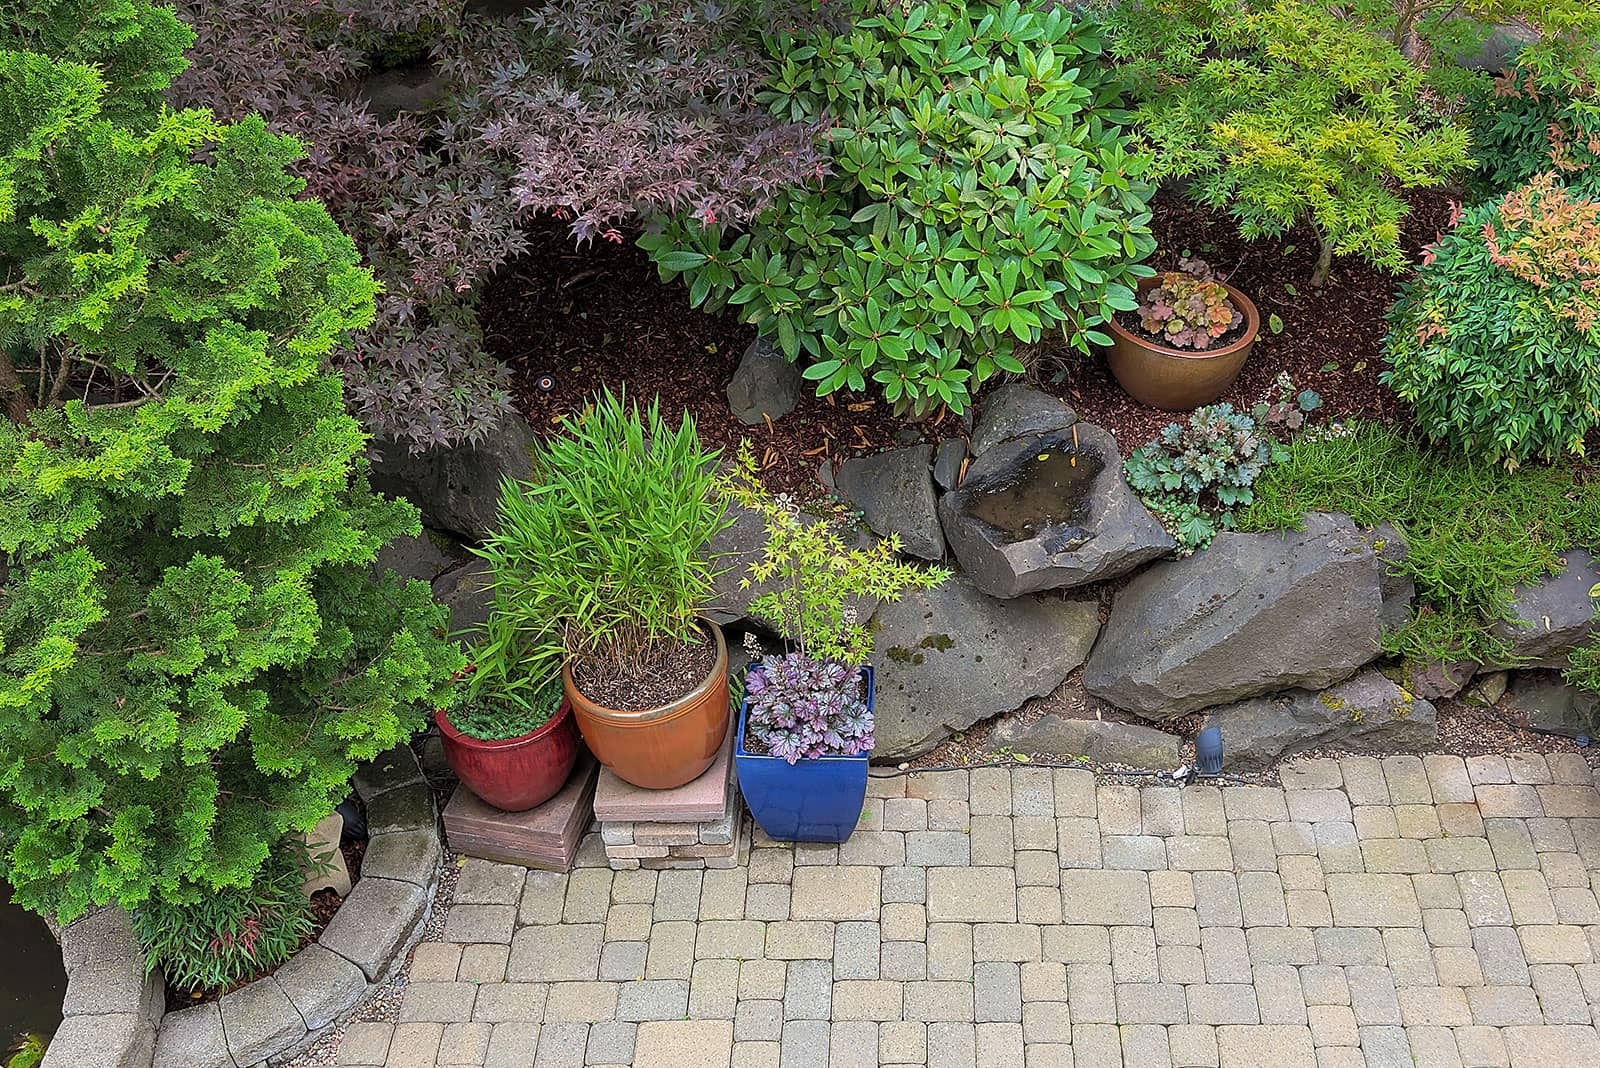 Backyard garden with paving stone patio, small garden walls, and lush green plantings